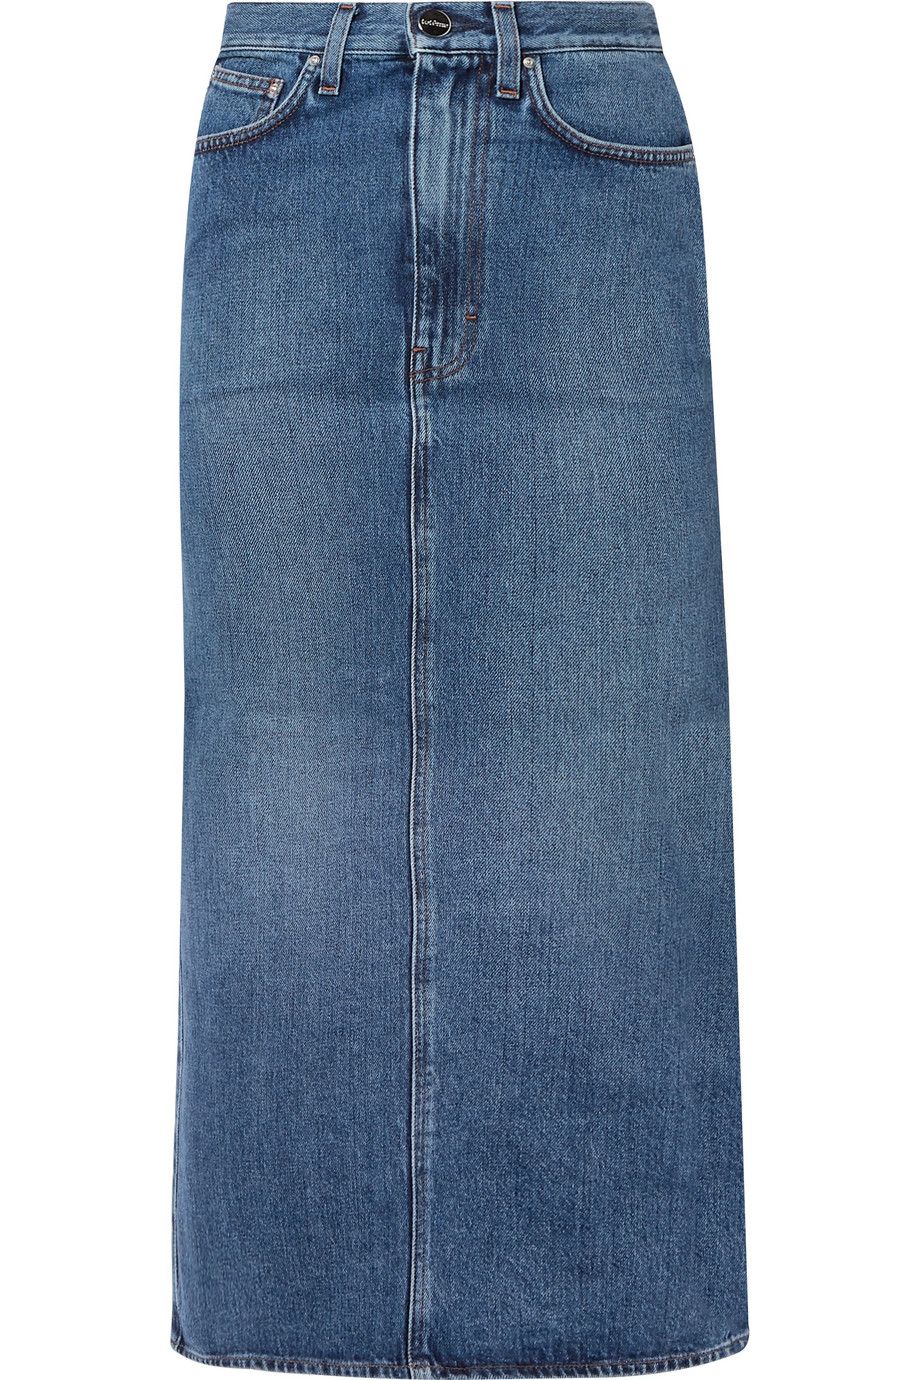 maxi jeans skirt